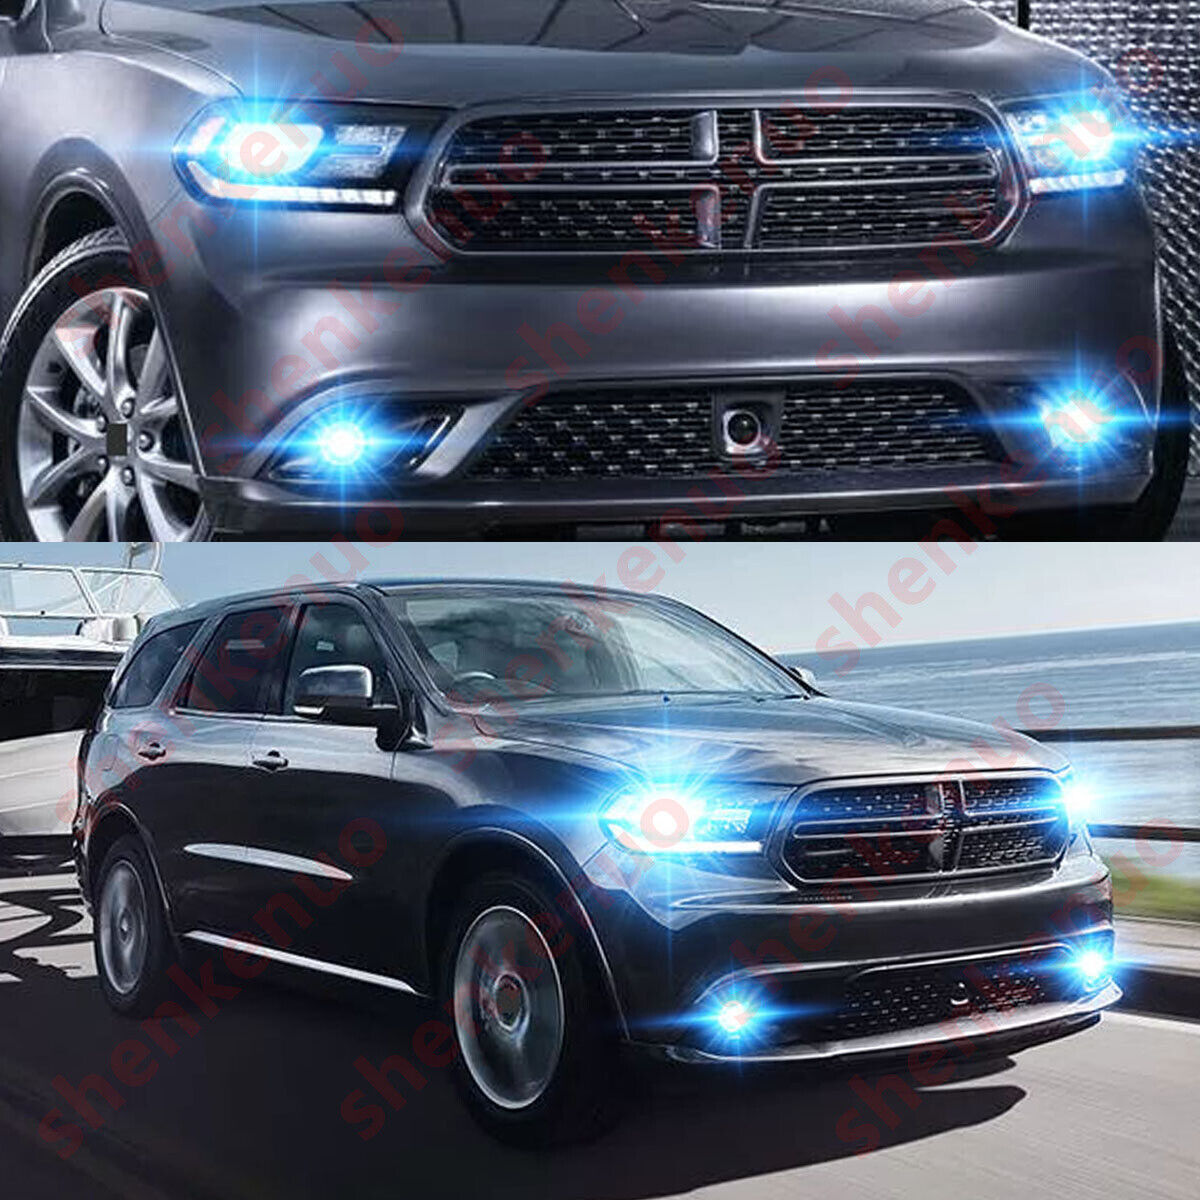 For Dodge Durango 2014 2015 - 4PC 8000K LED Headlights + Fog Lights Bulbs Kit